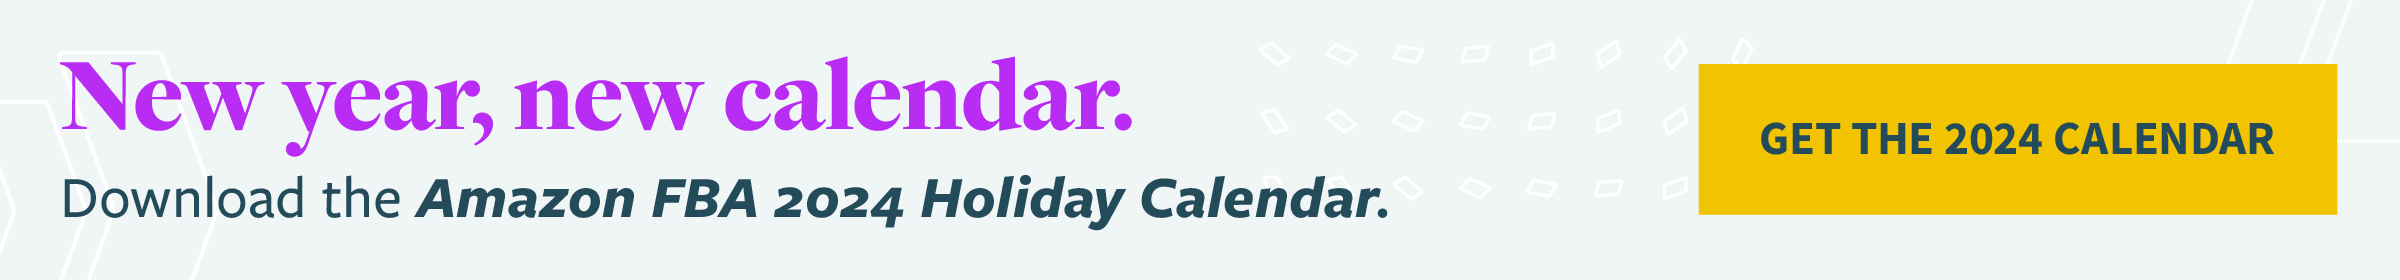 Amazon FBA 2024 Holiday Calendar and Checklist